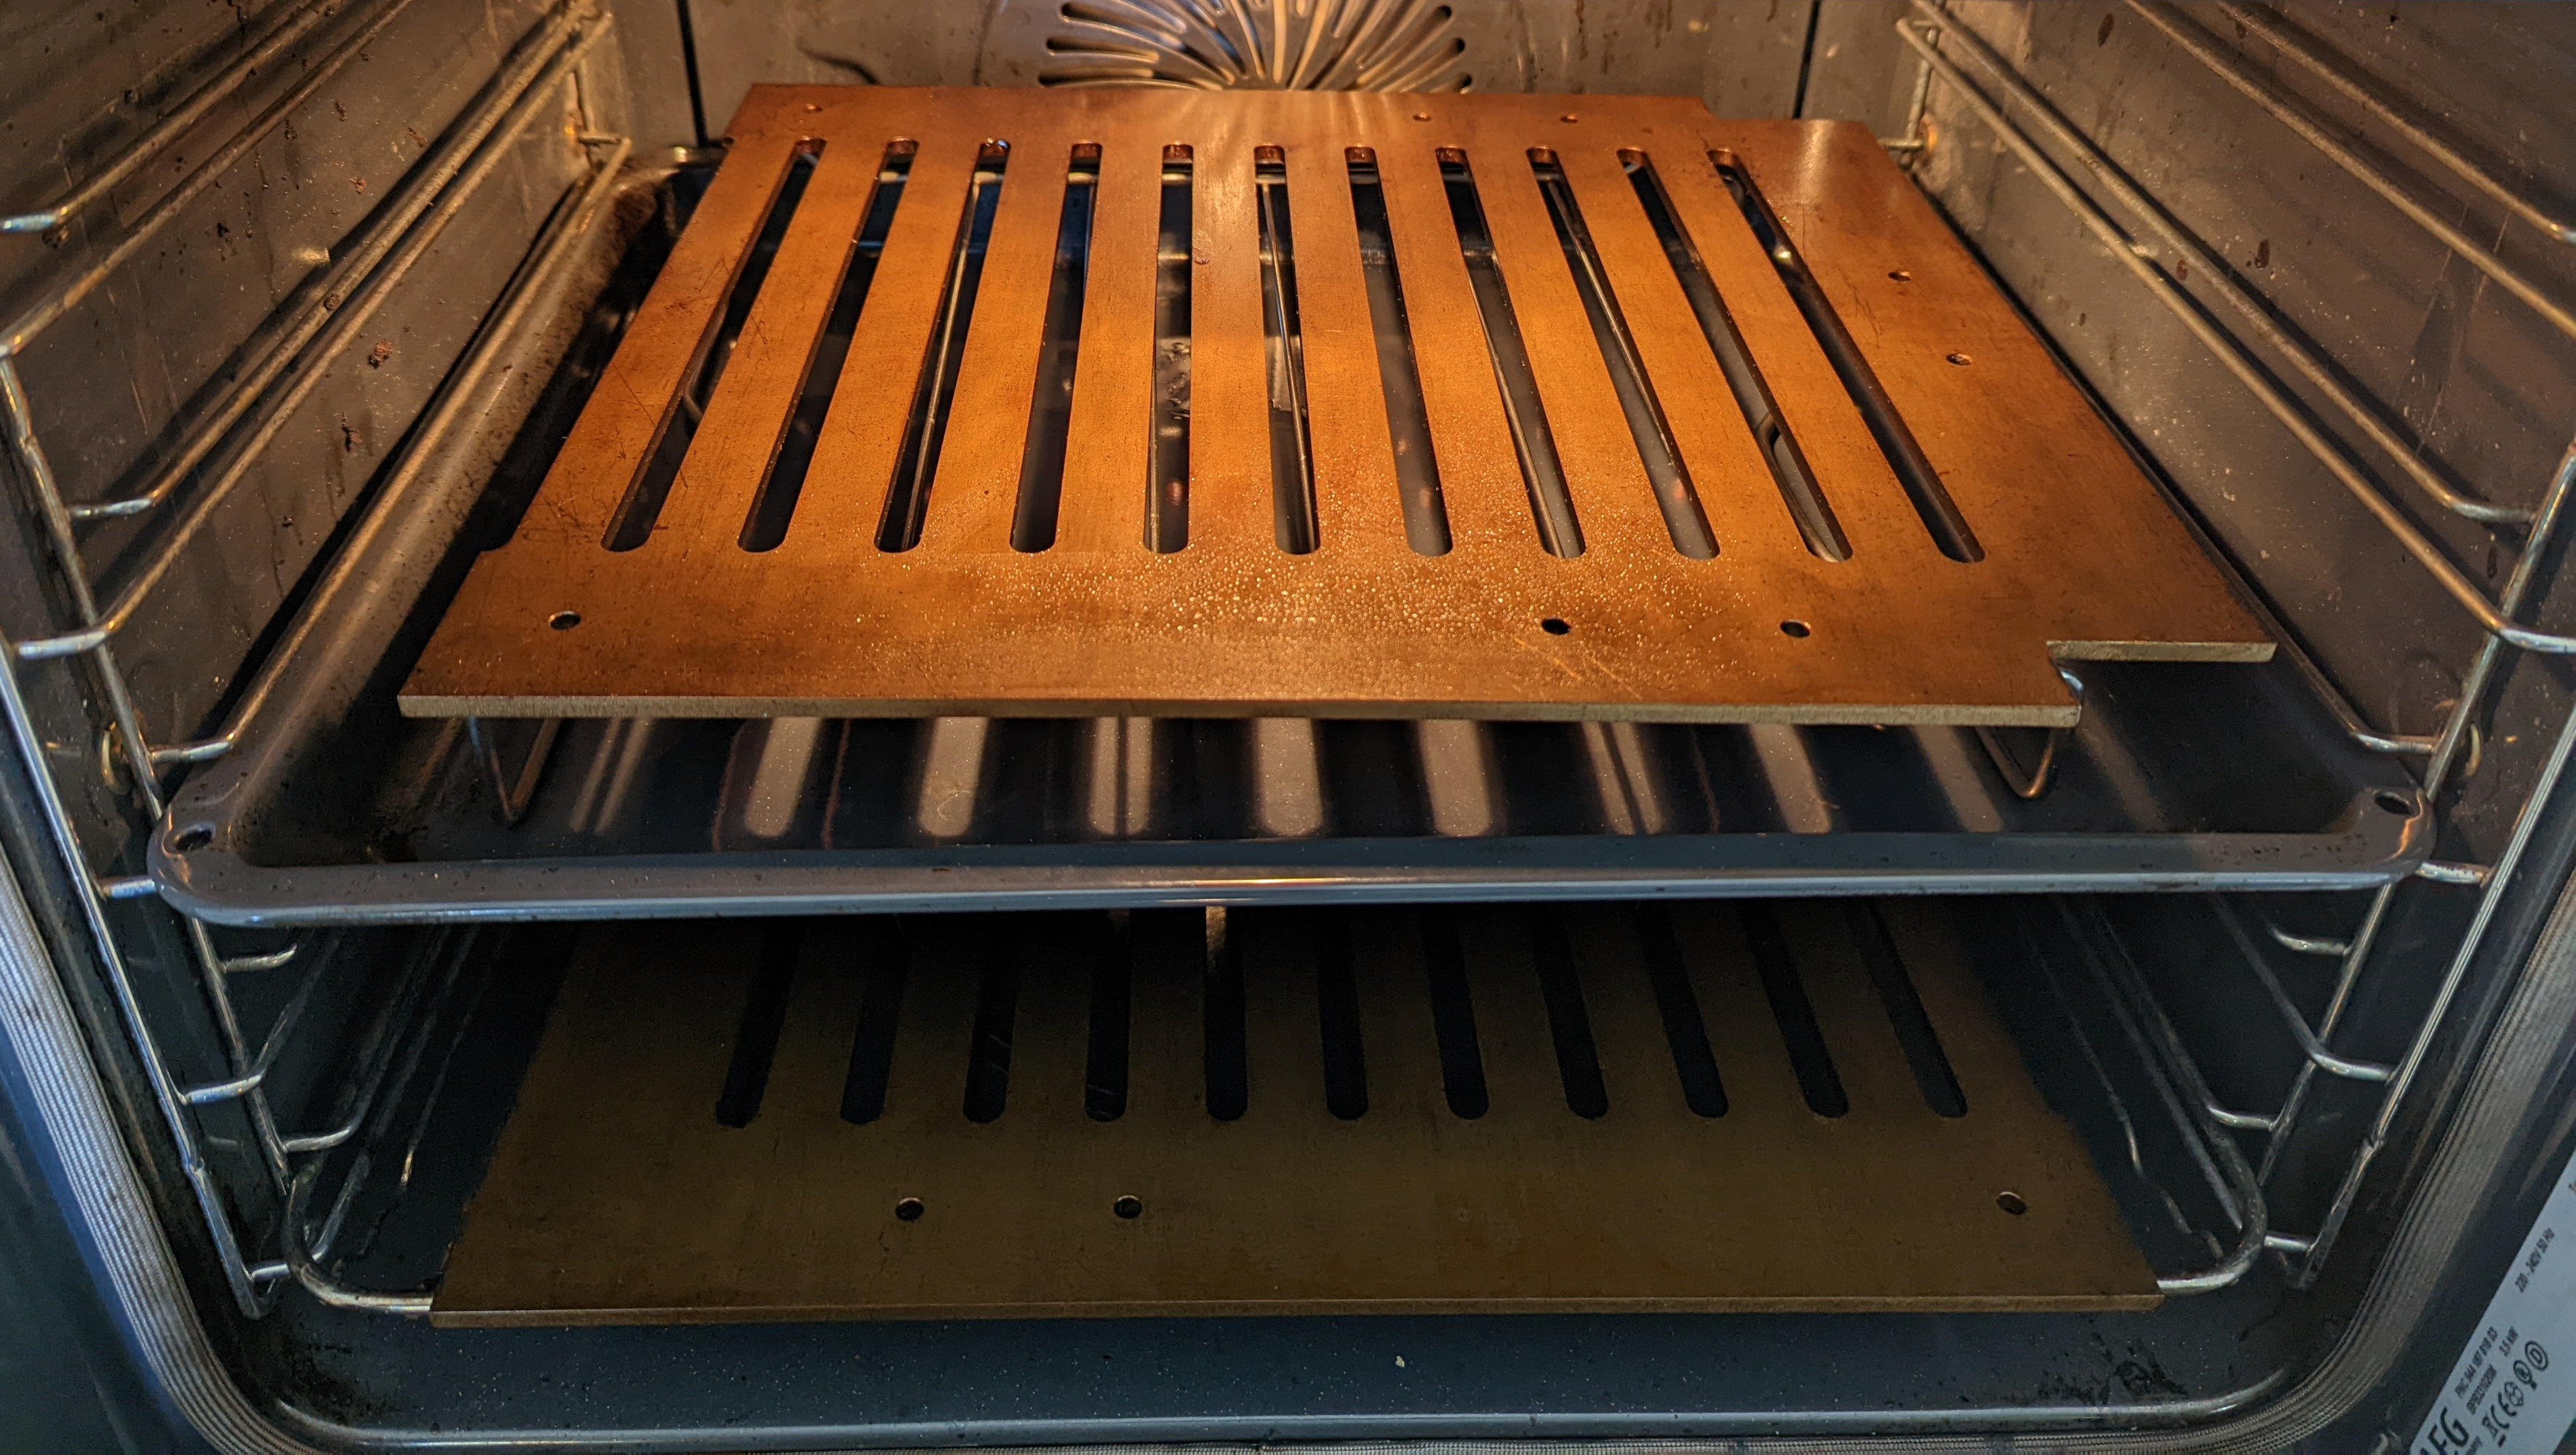 Two brown steel grates sitting on racks in a fan forced oven.